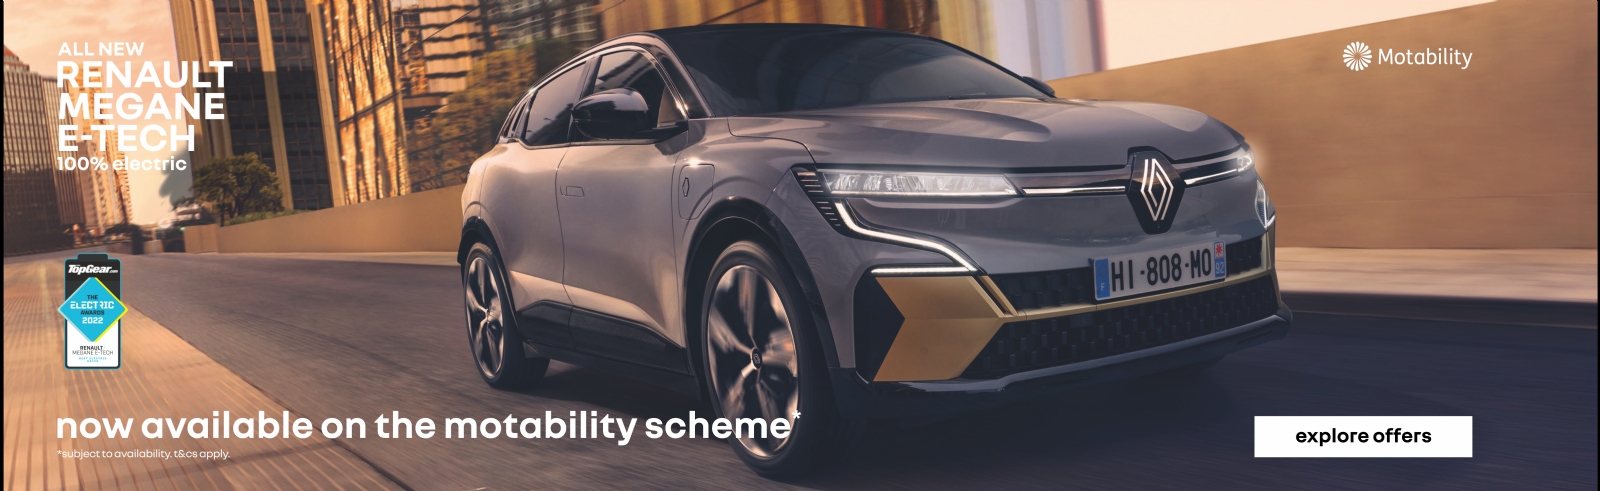 Renault Motability